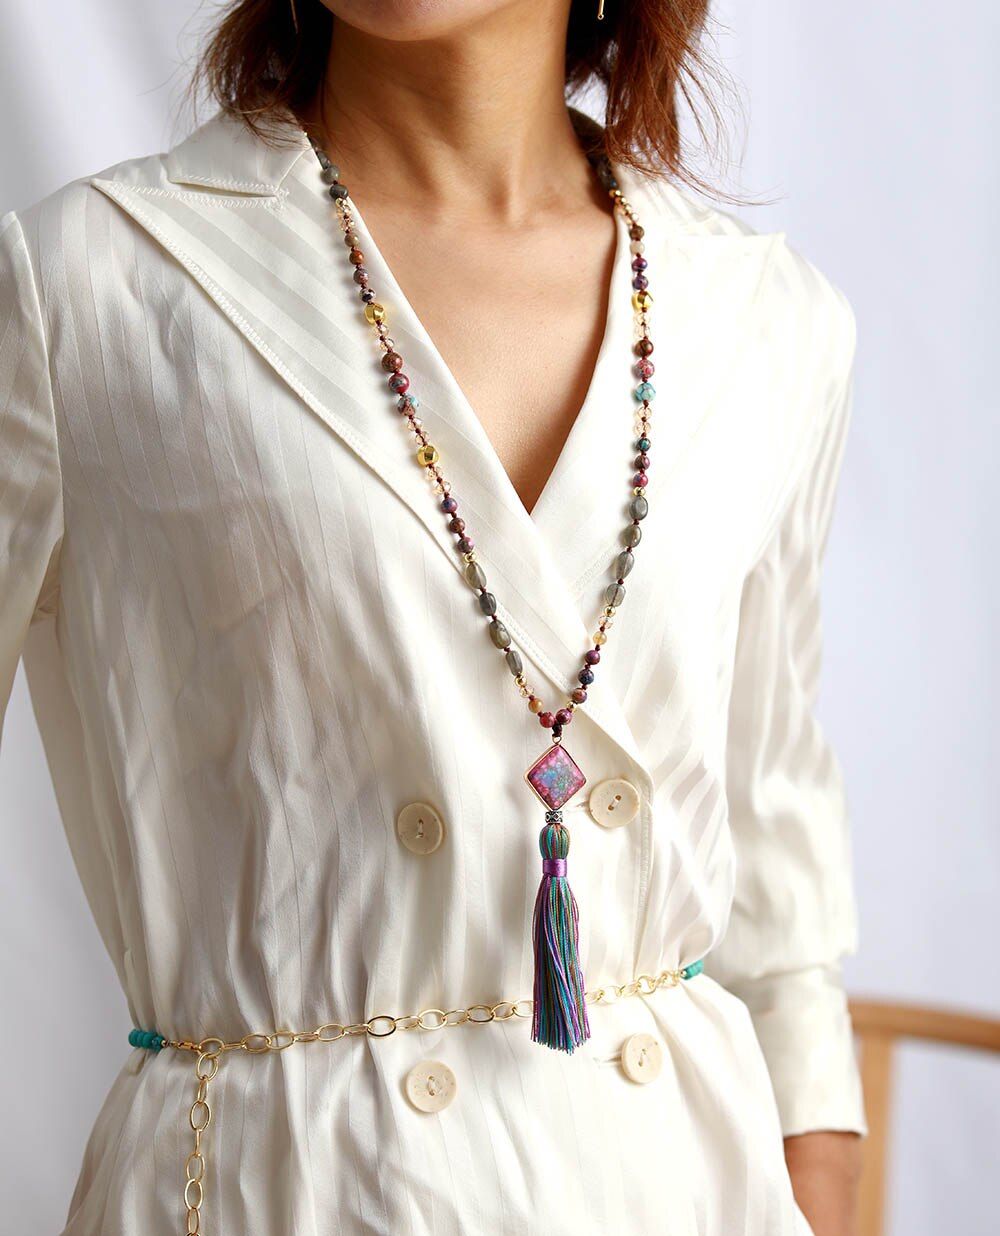 'Rhombi Pendant' Agate, Labradorite and Jasper 108 Mala Beads Necklace - Allora Jade